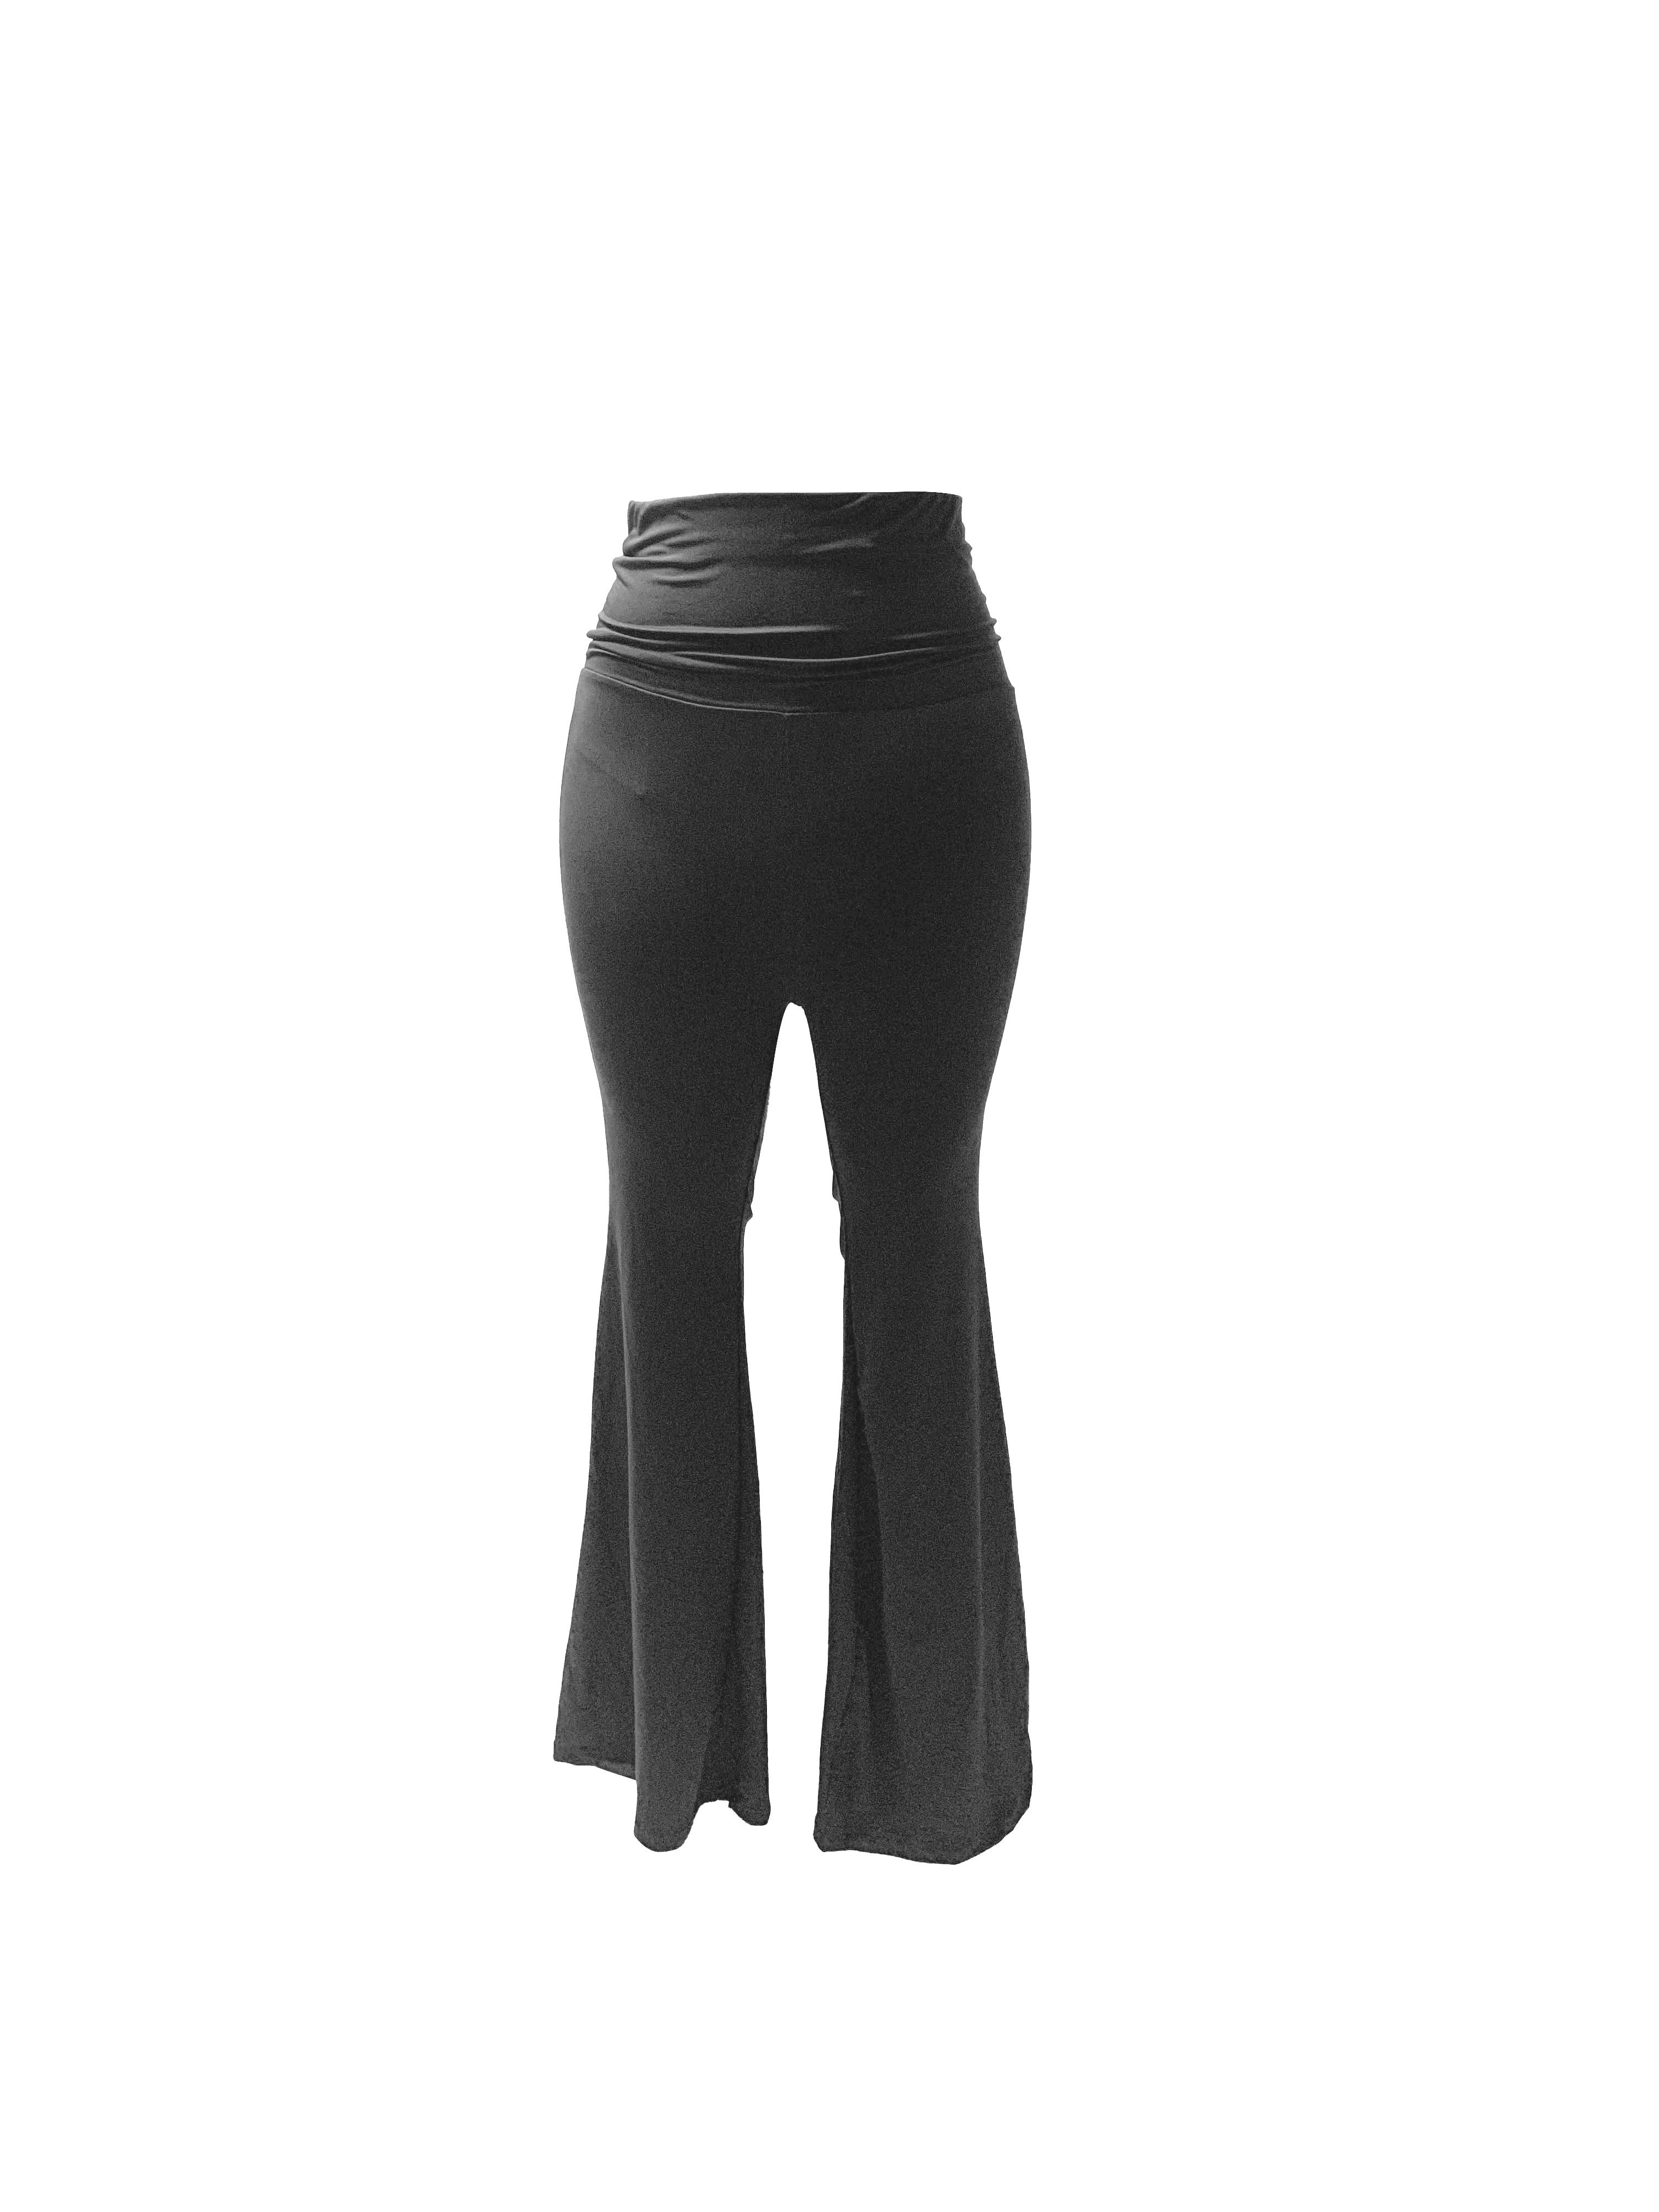 Ketyyh-chn99 Leggings for Women Ruched Flare Leg Drawstring High Rise  Elastic Waist Solid Long Pants Black,M 